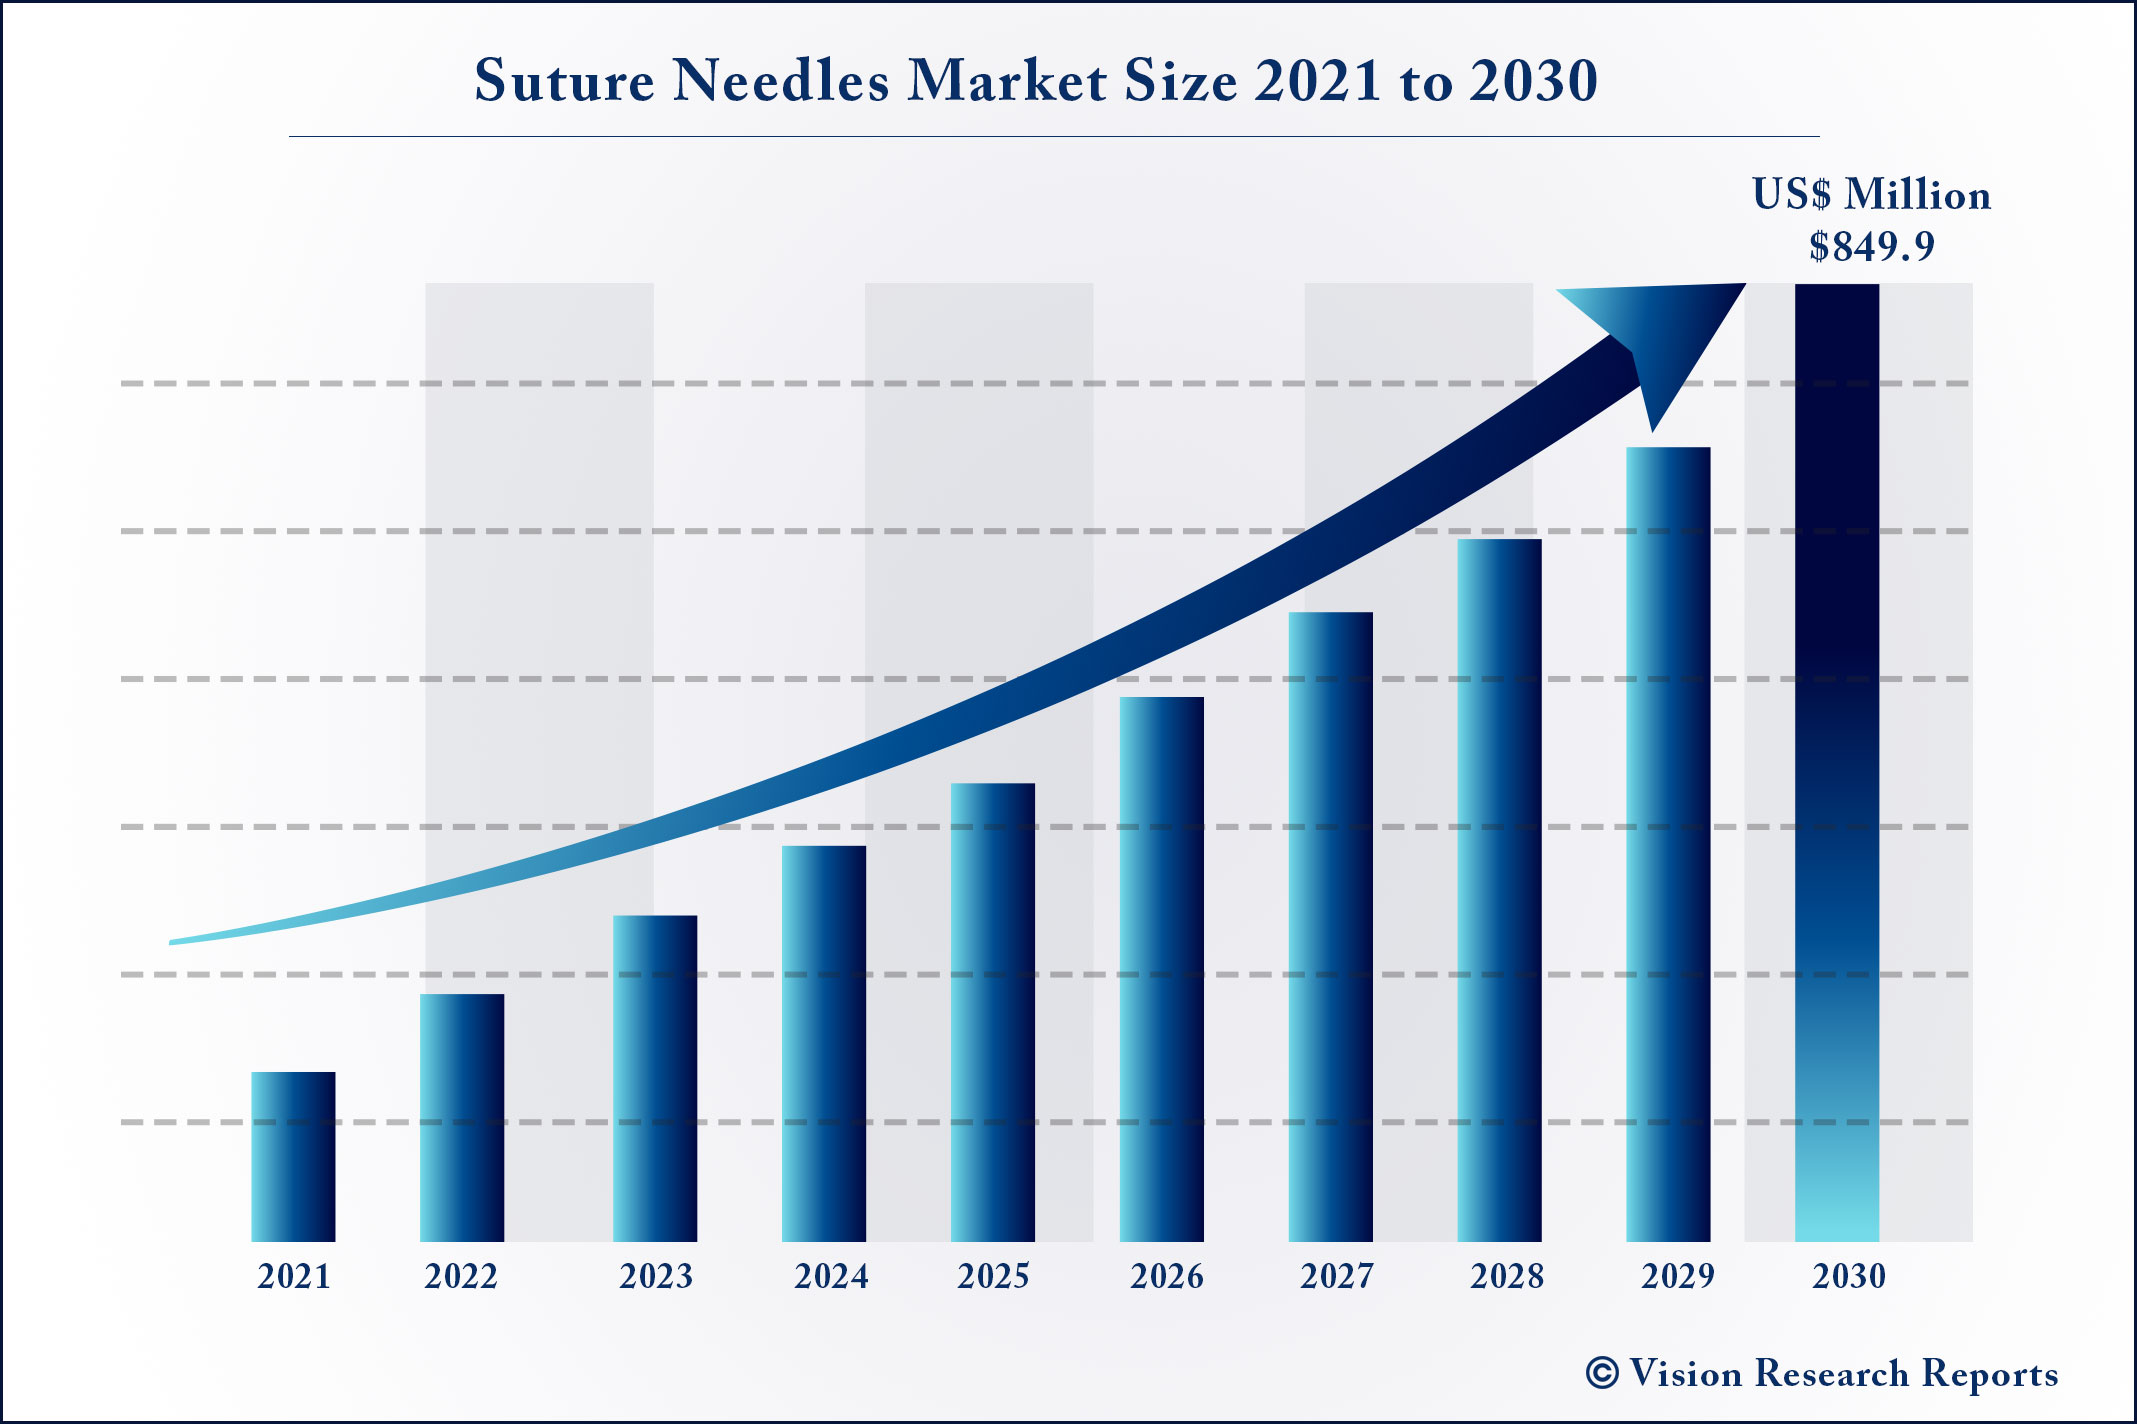 Suture Needles Market Size 2021 to 2030